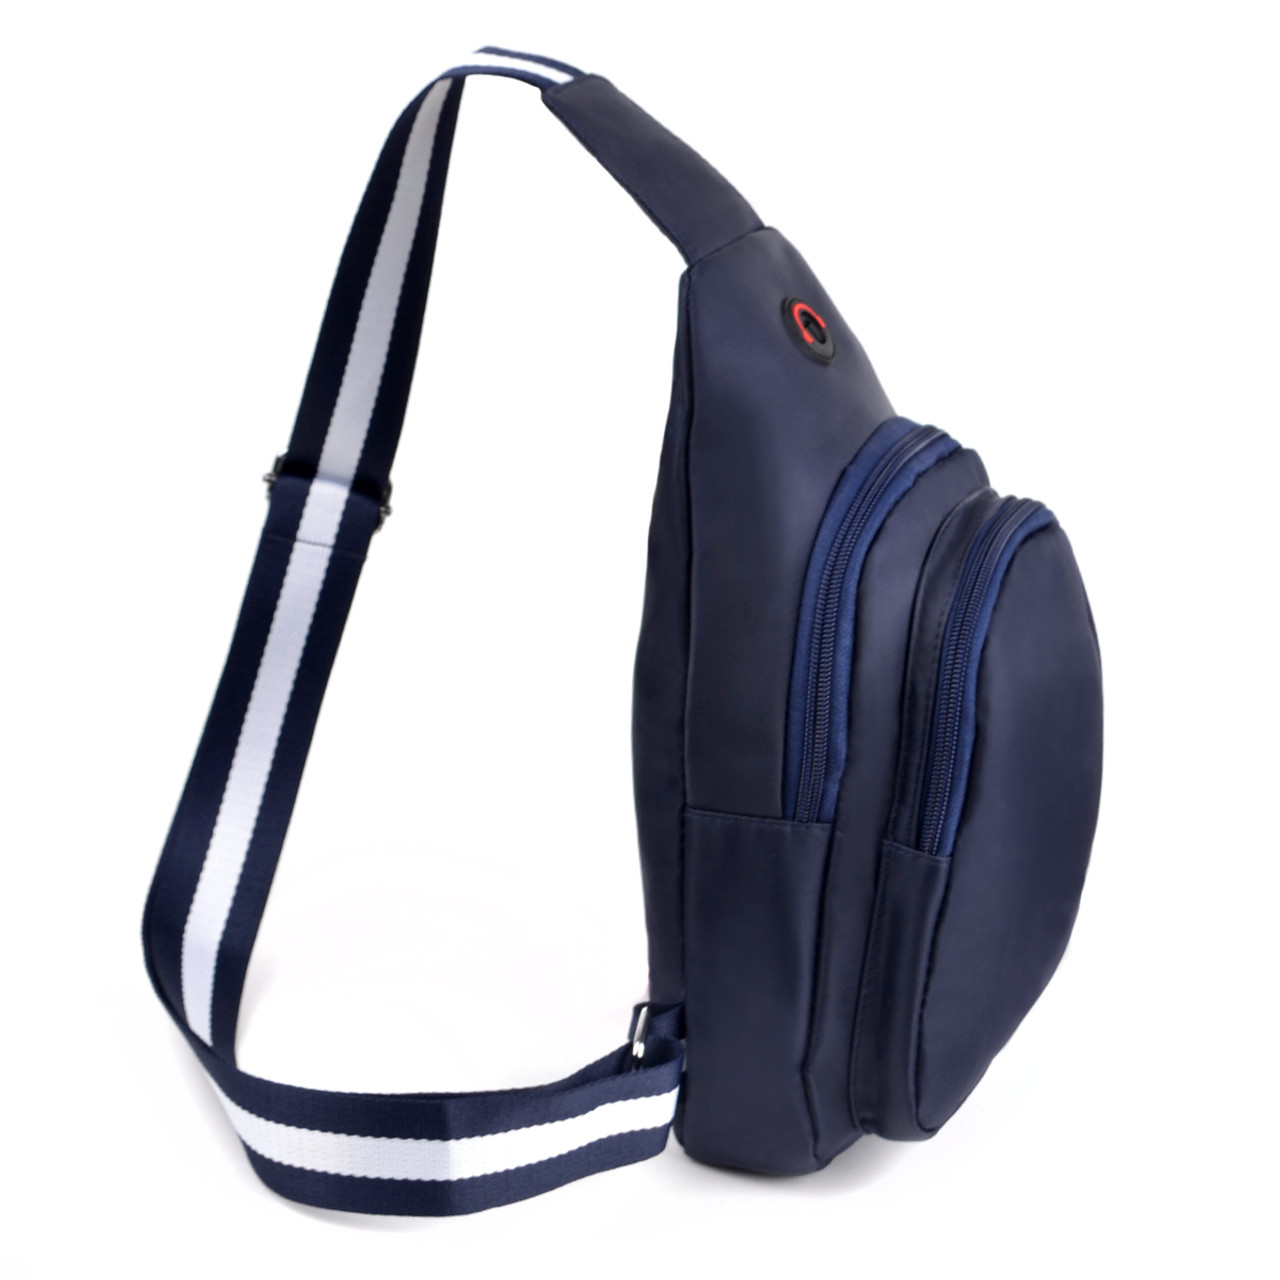 Buy online Navy Blue Textured Regular Sling Bag from bags for